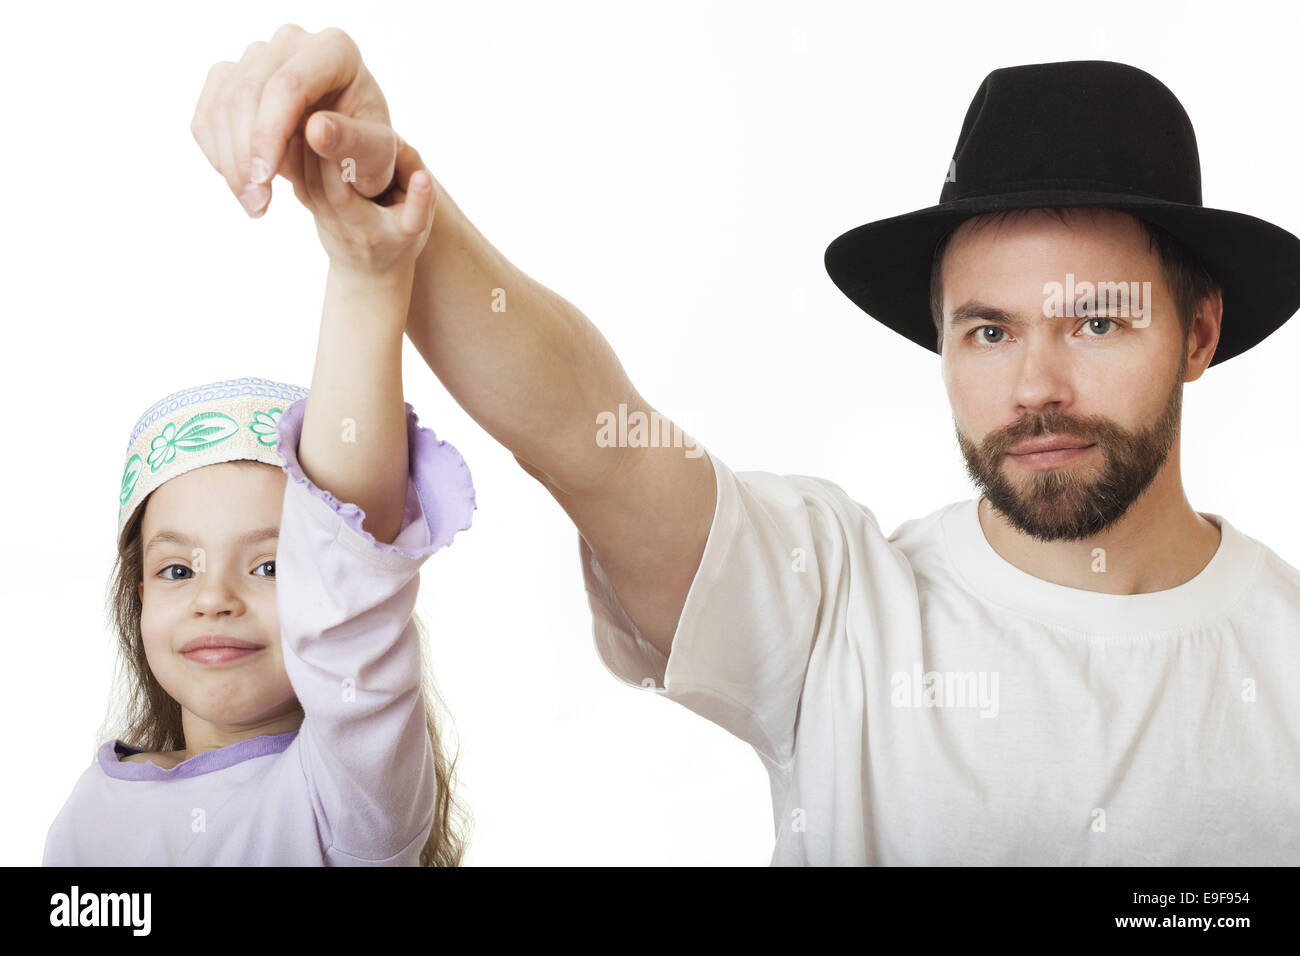 Man in Jewish hat and girl in skullcap. Stock Photo